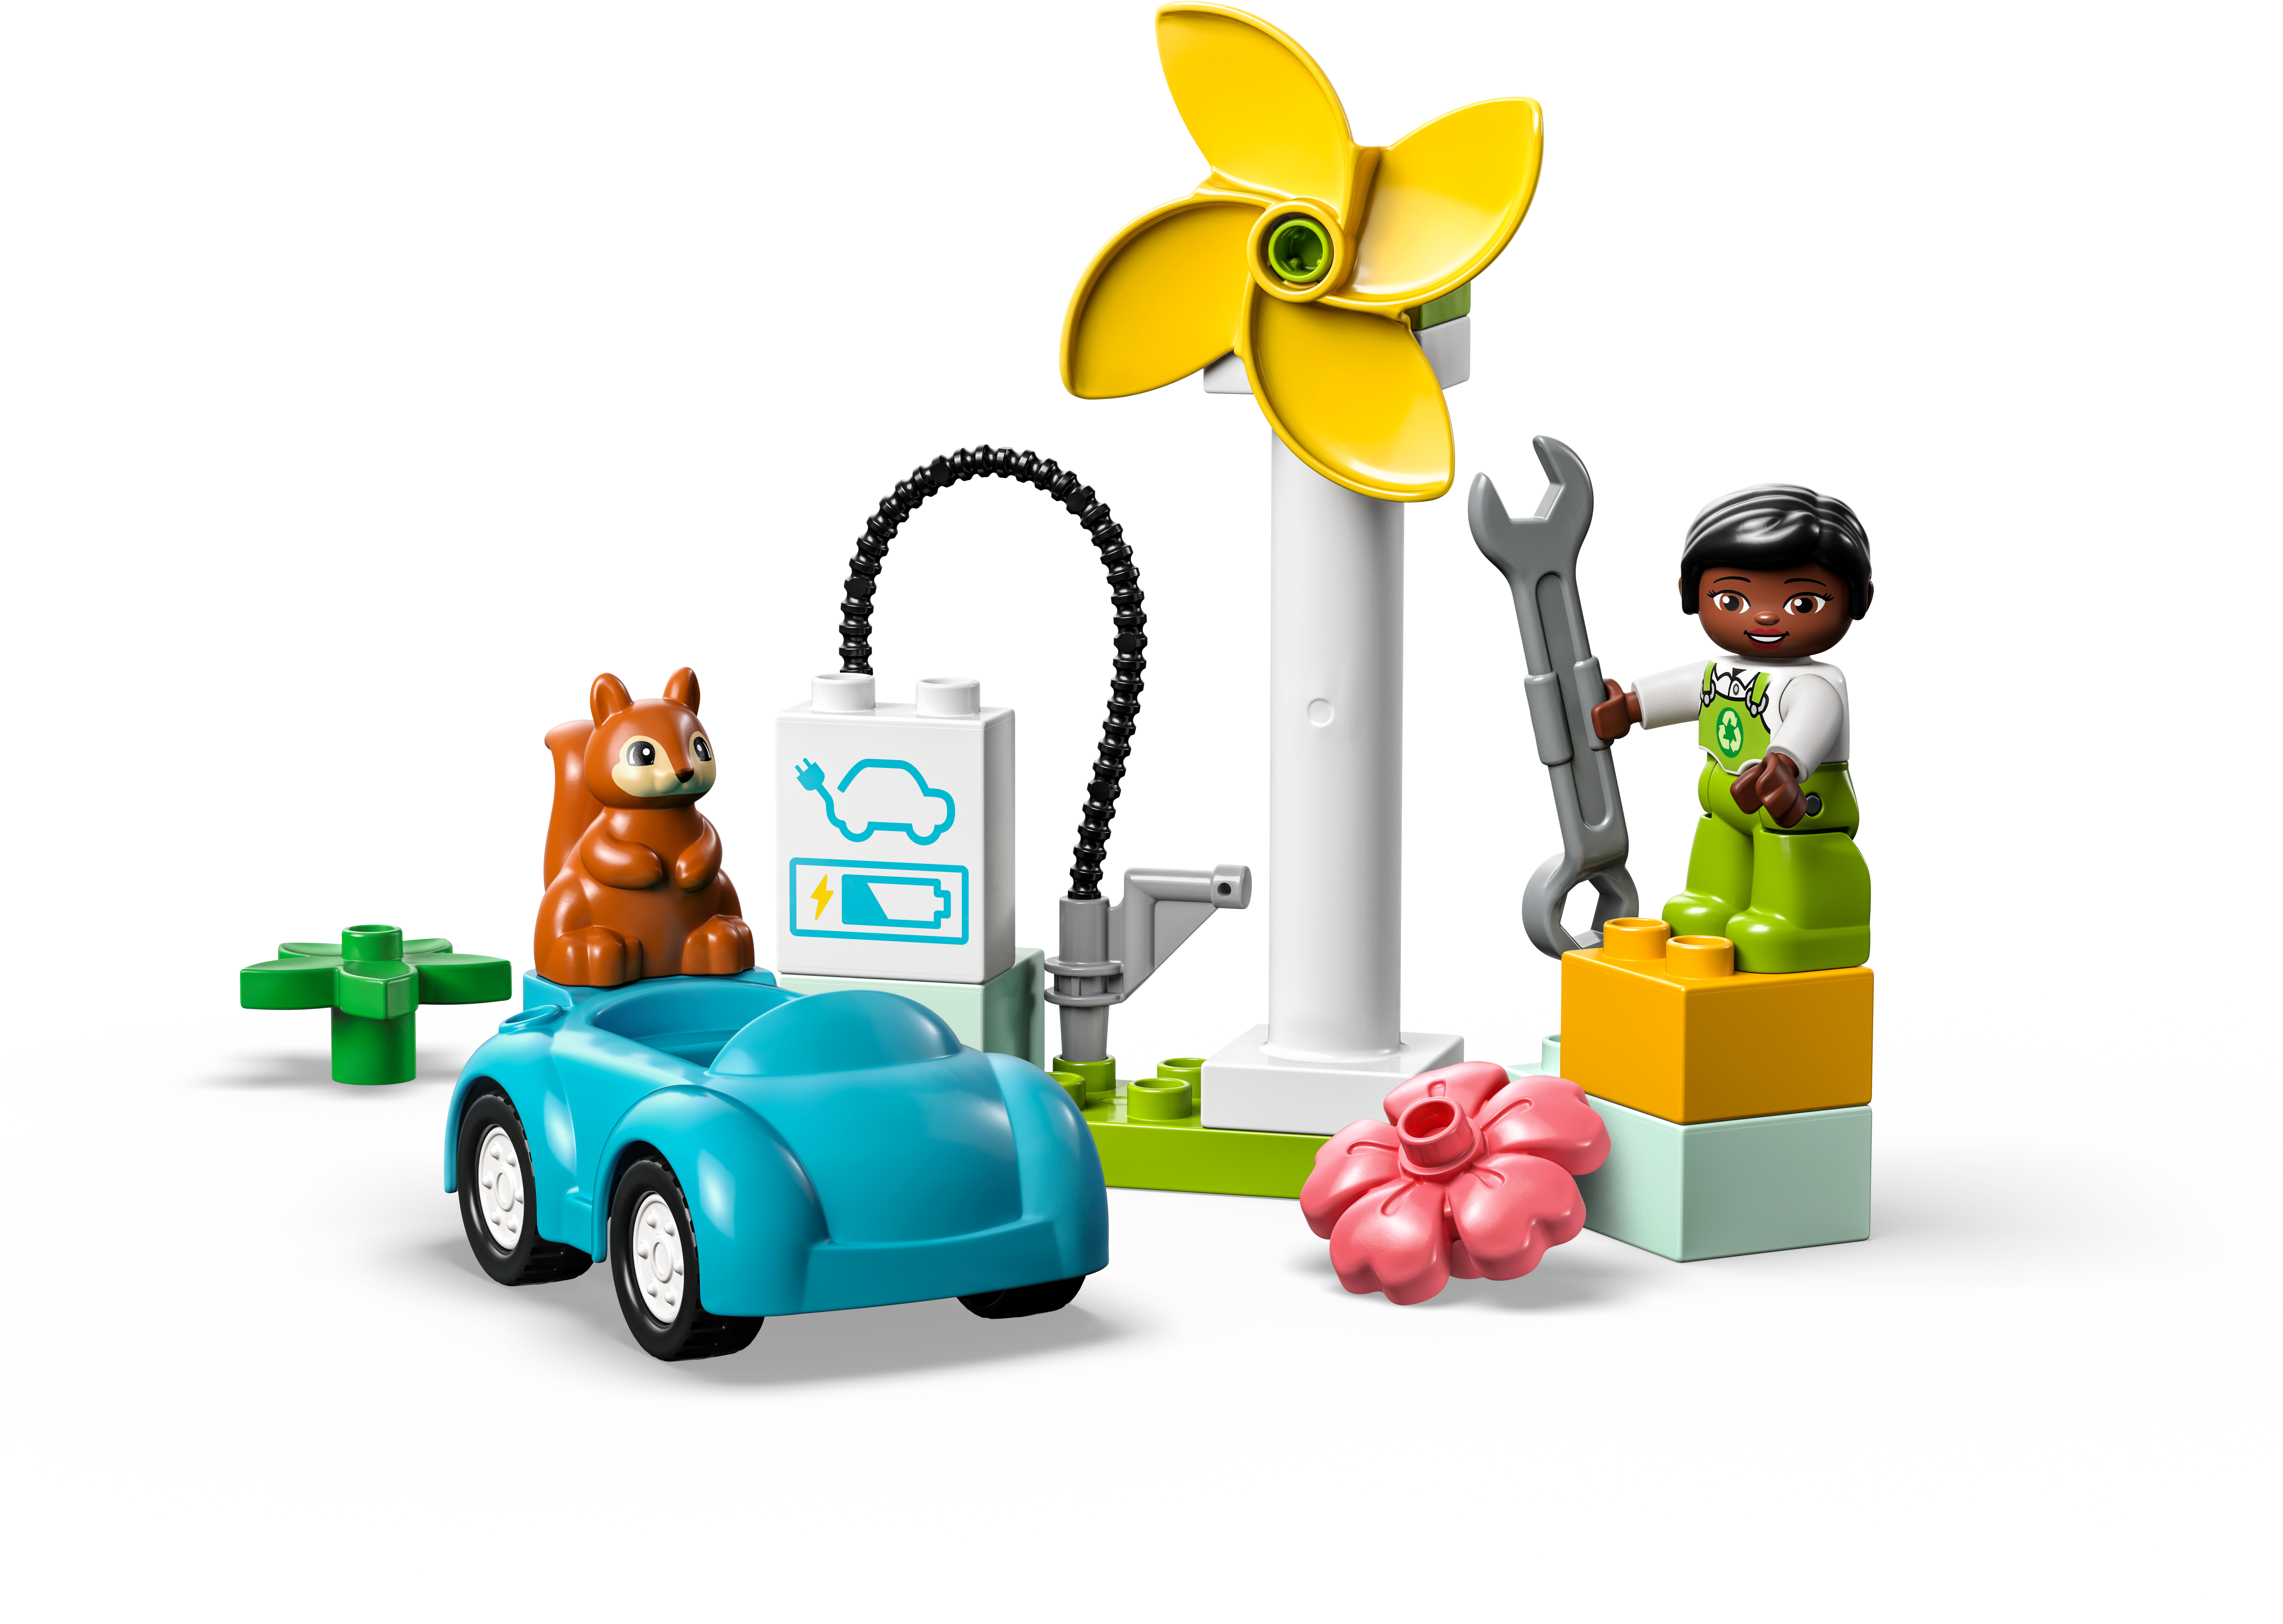 LEGO DUPLO® 10985 Windrad und Elektroauto